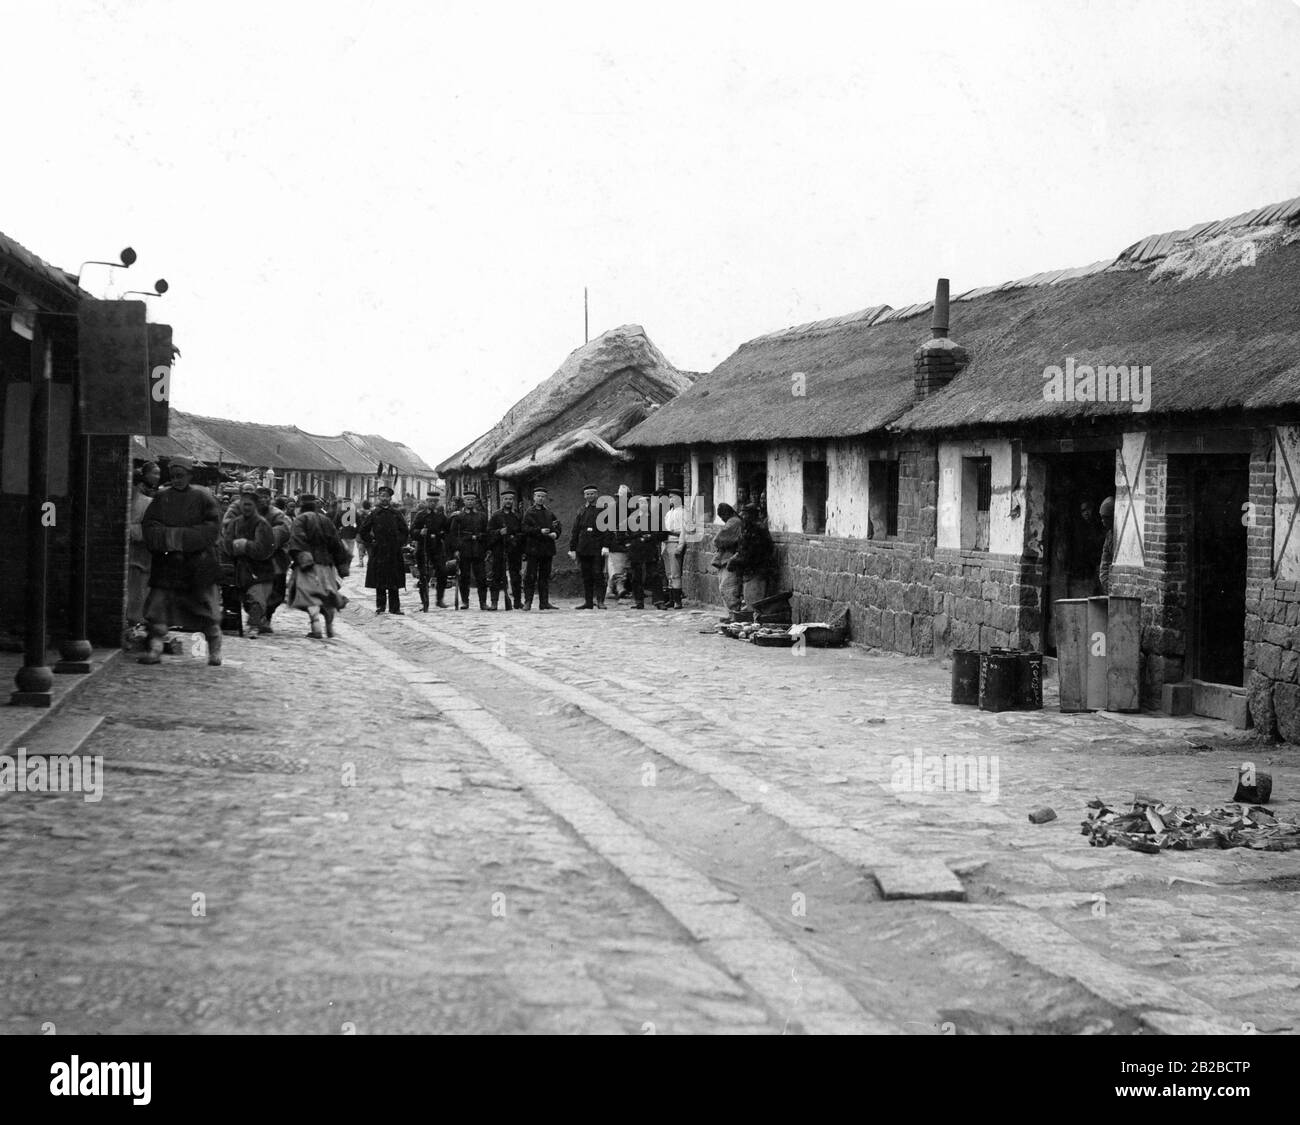 The then main street of Tsingtau with a German military patrol. Stock Photo